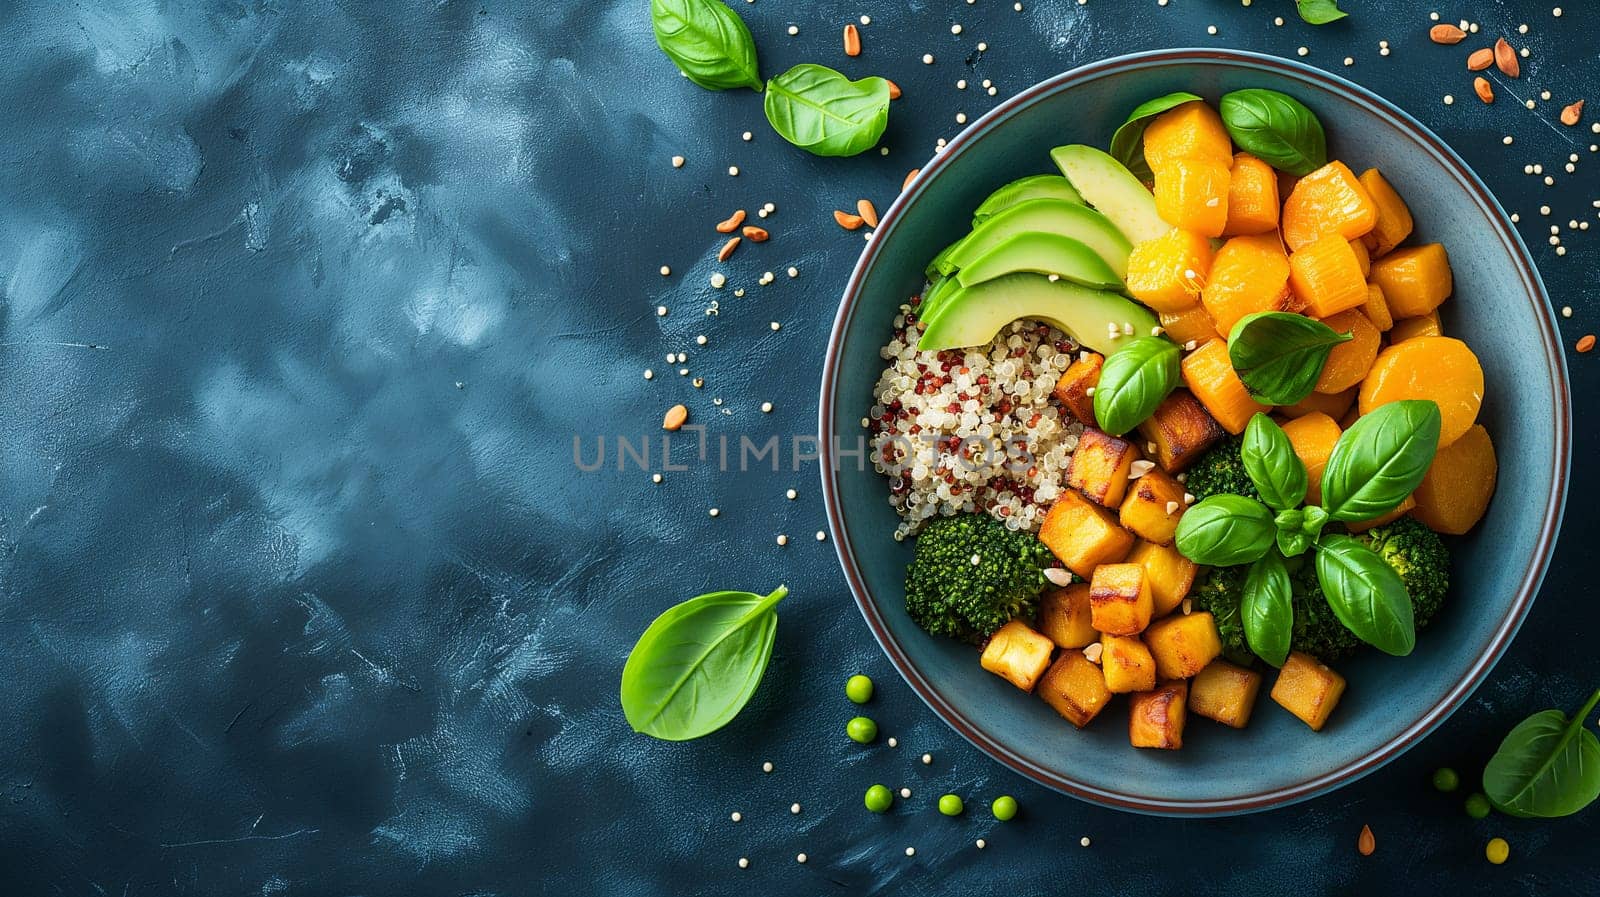 Healthy Quinoa Salad With Sweet Potato and Avocado by chrisroll